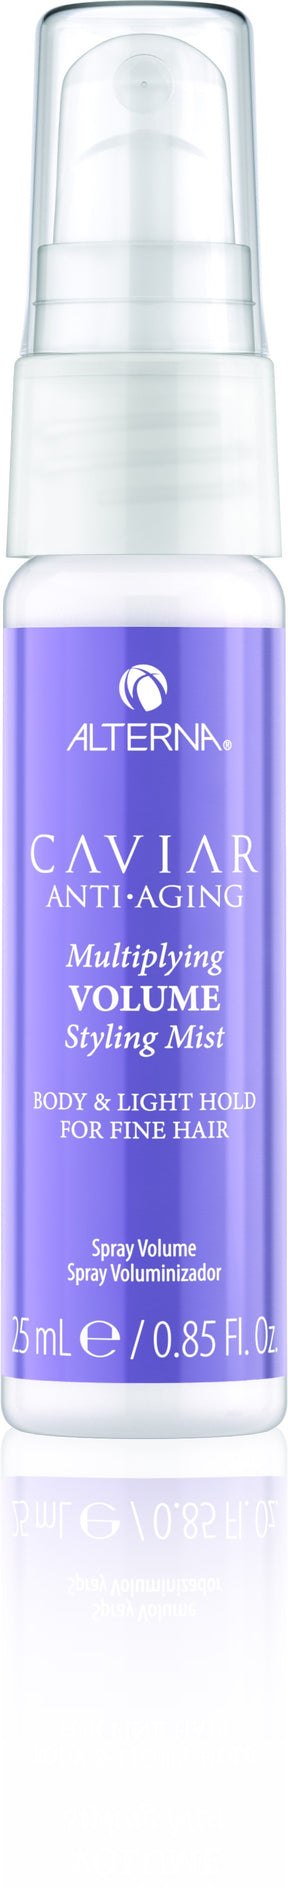 Alterna Caviar Anti-Aging Multiplying Volume Styling Mist 25 ml